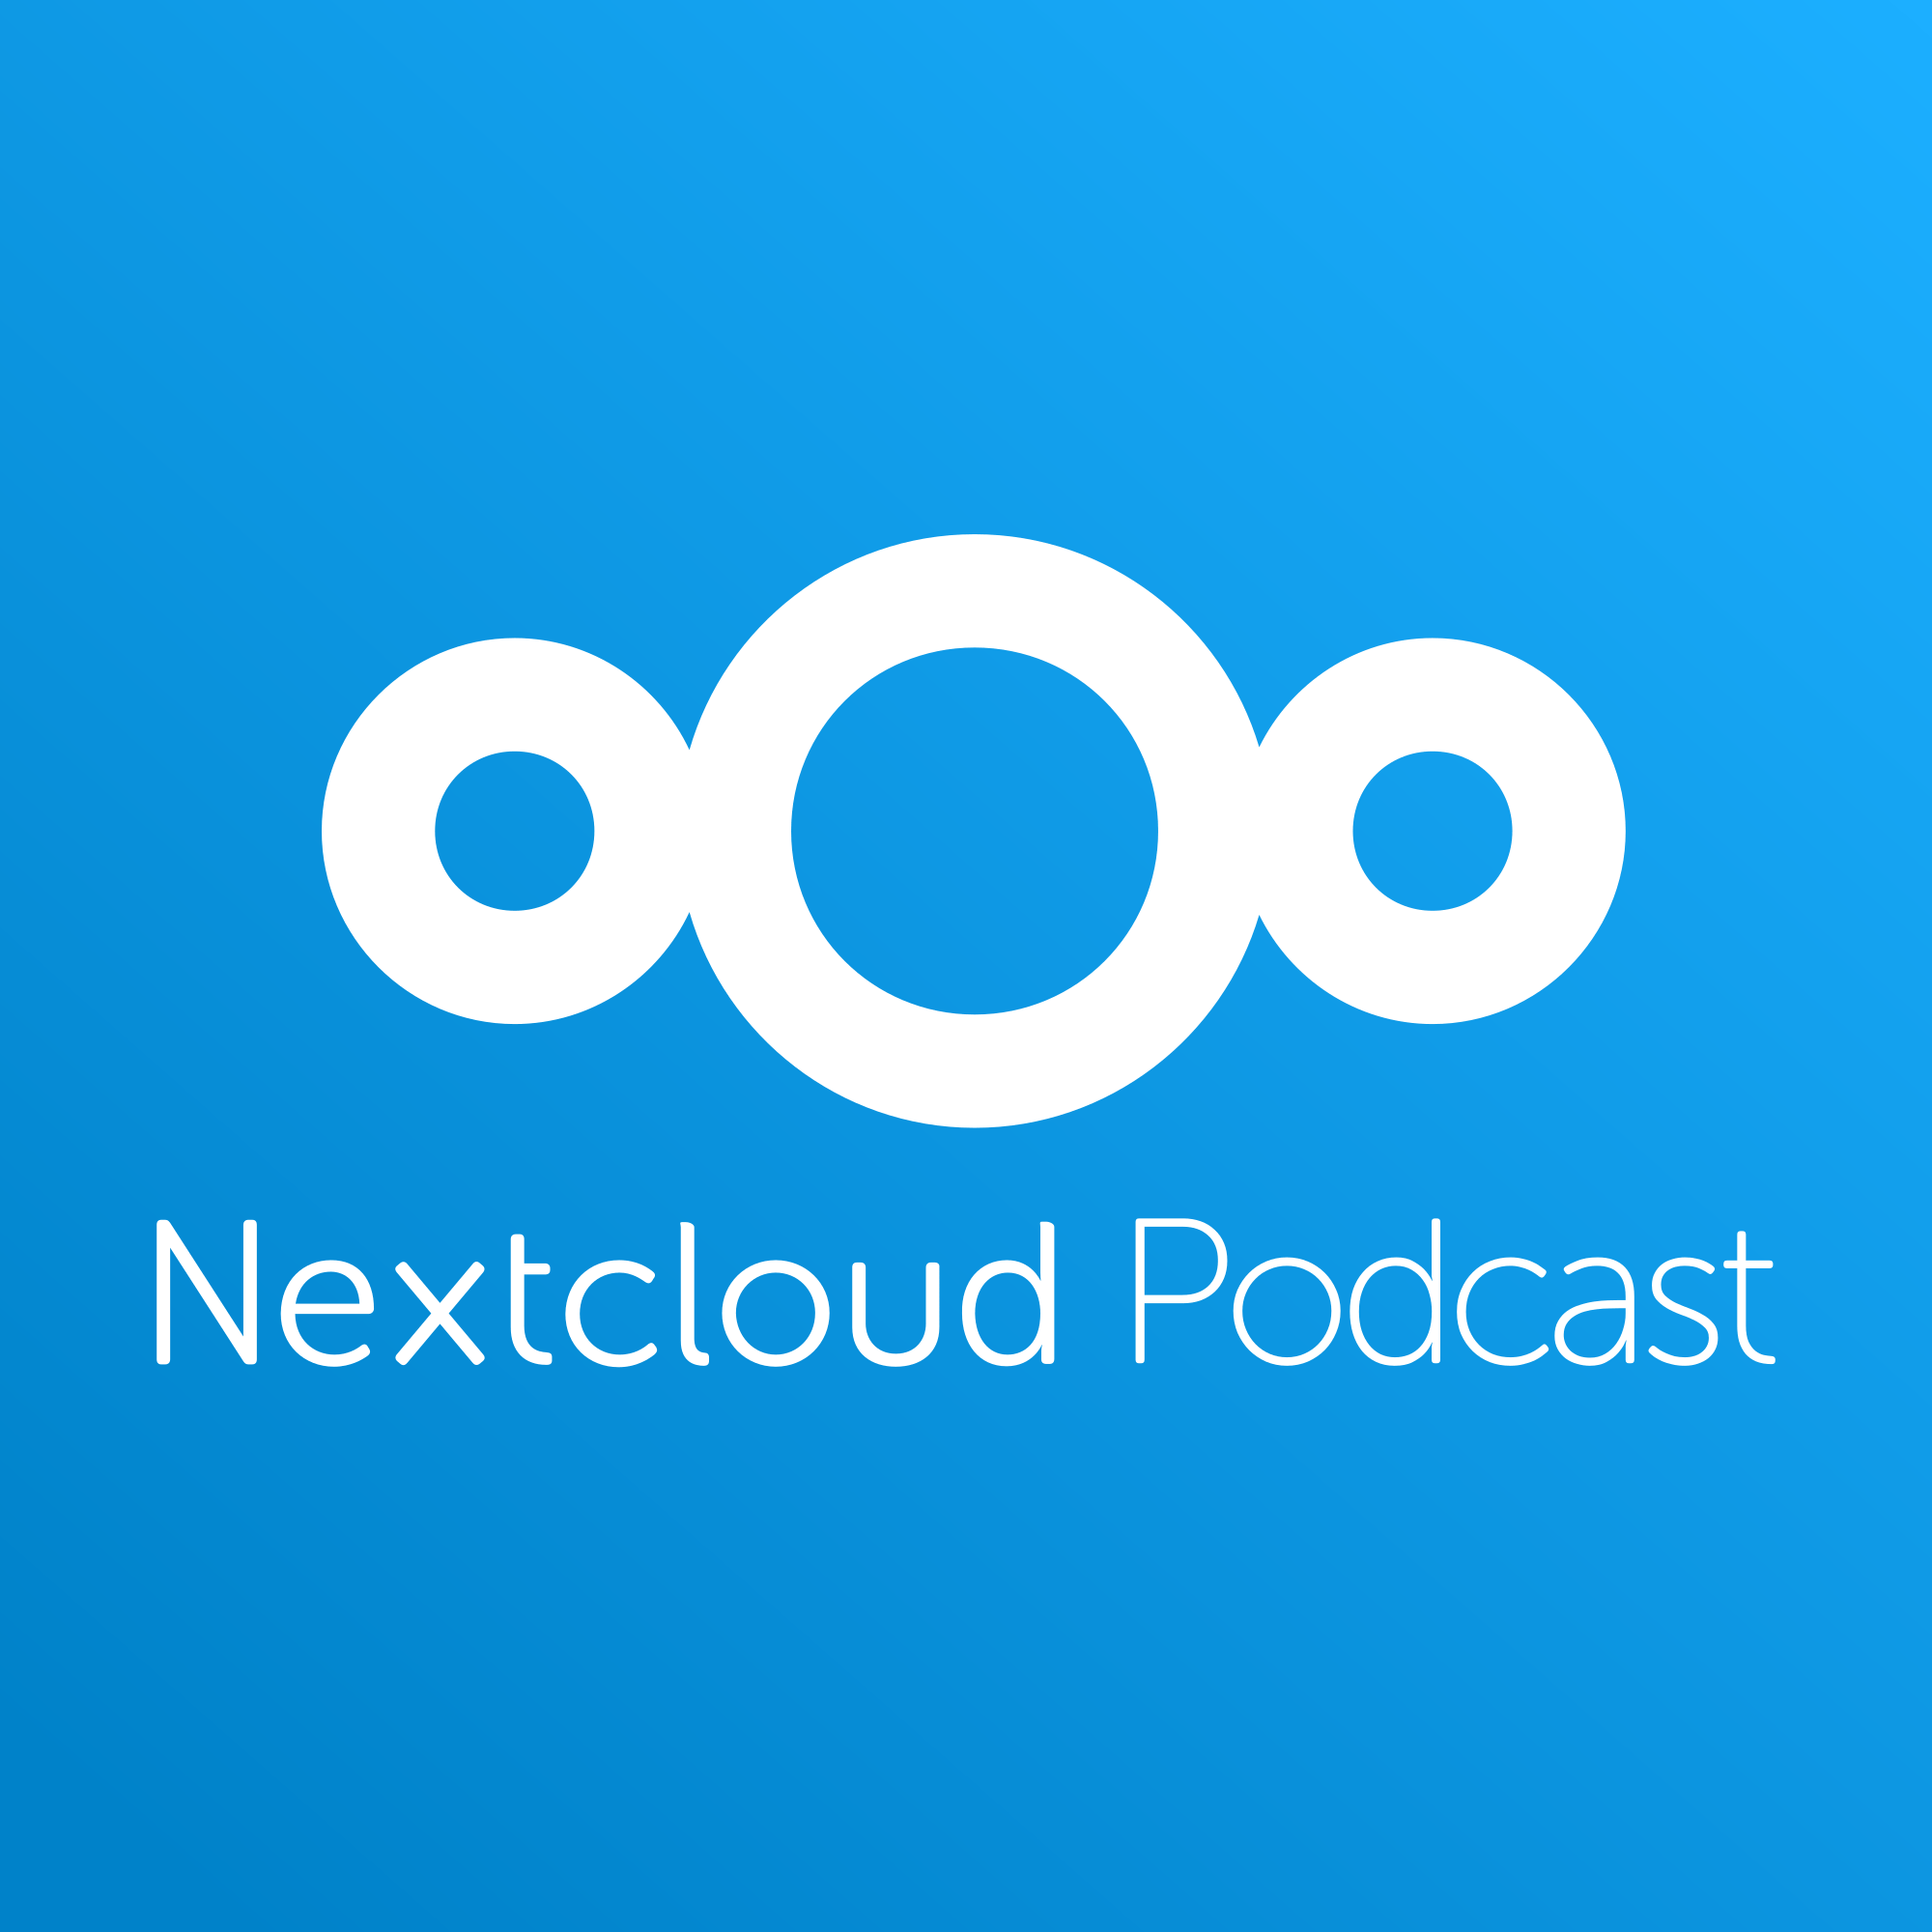 podcast logo - nextcloud logo with Nextcloud Podcast written below